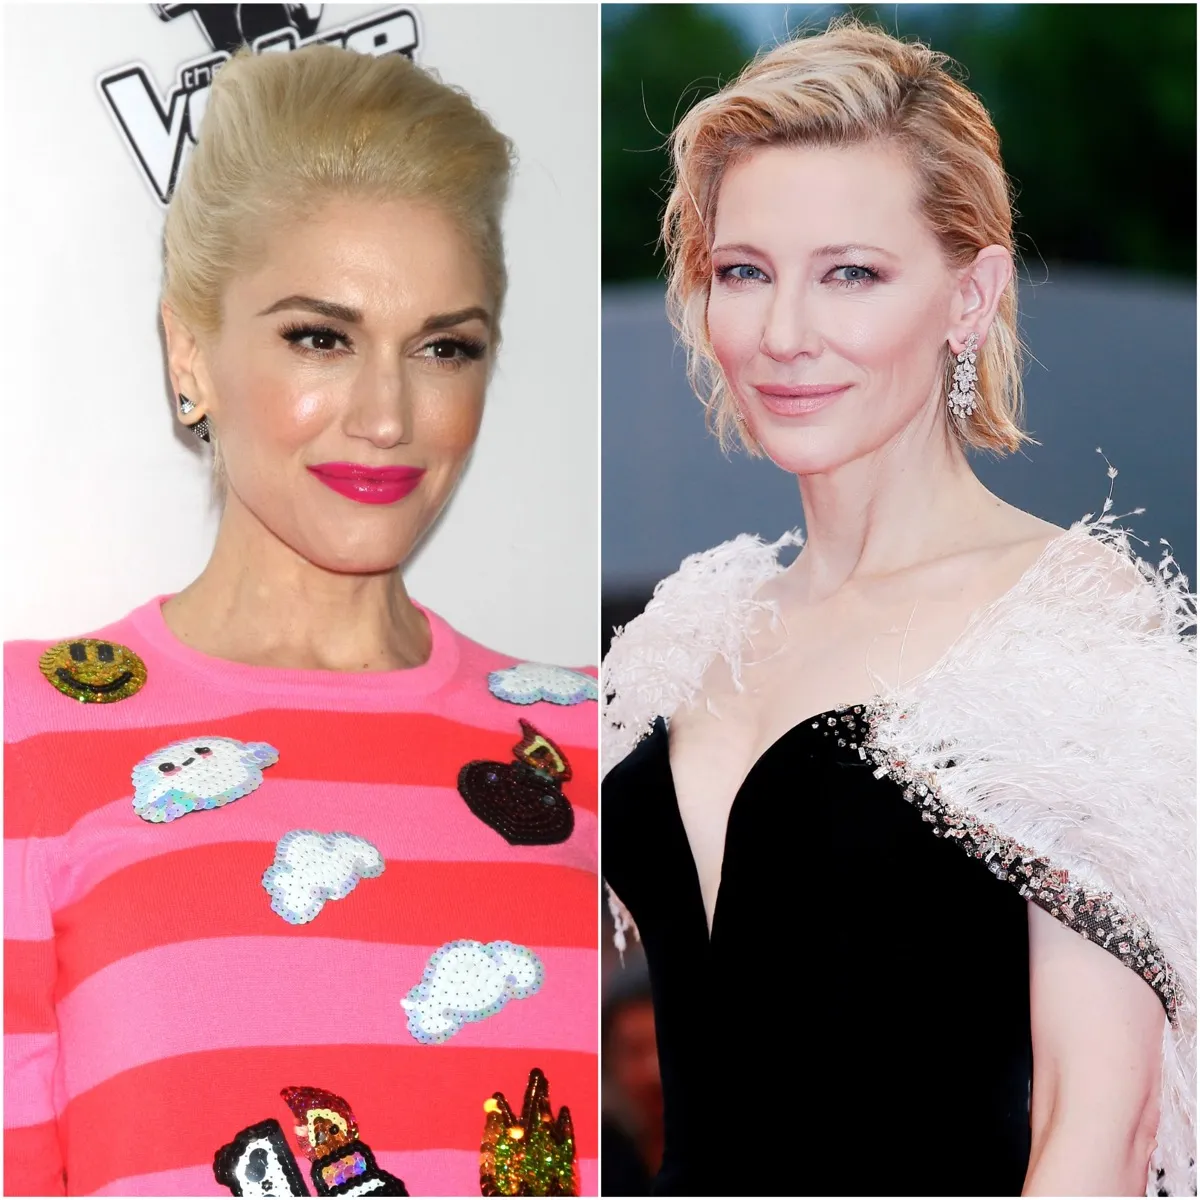 Gwen Stefani and Cate Blanchett